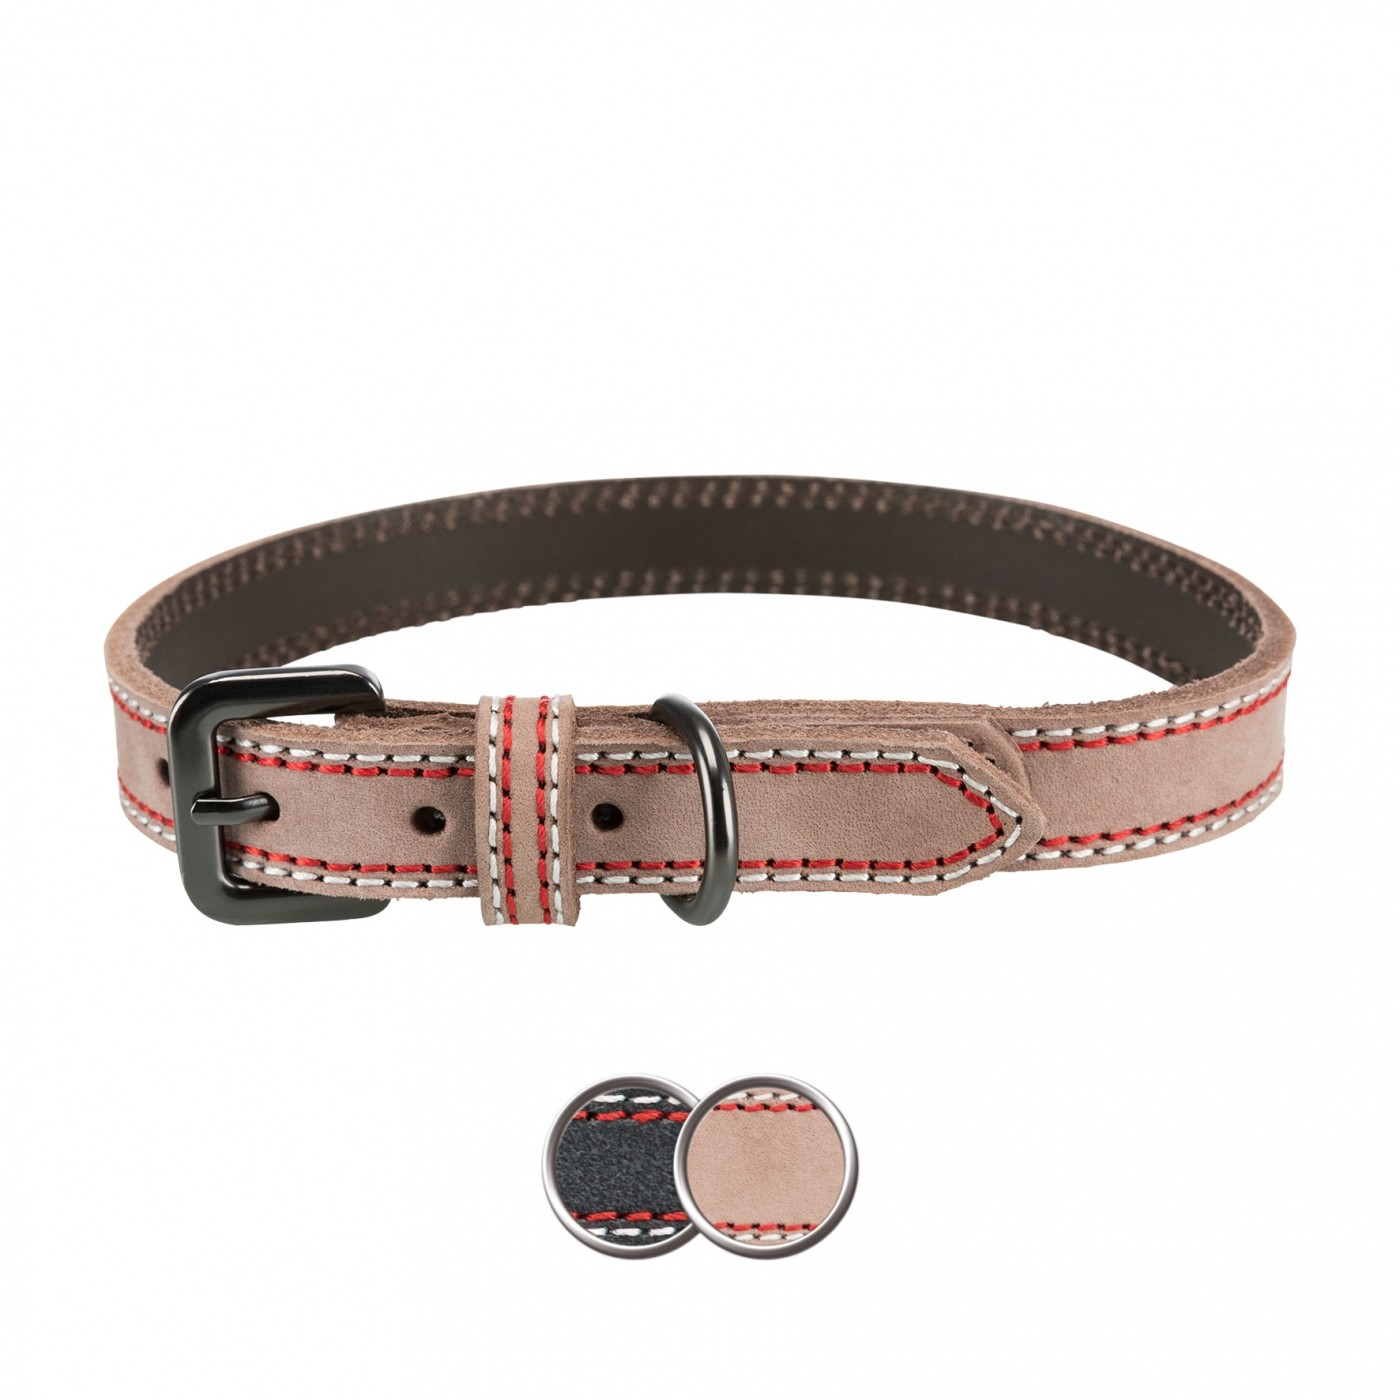 Collar para perro color capuchino Native - 6 tallas disponibles